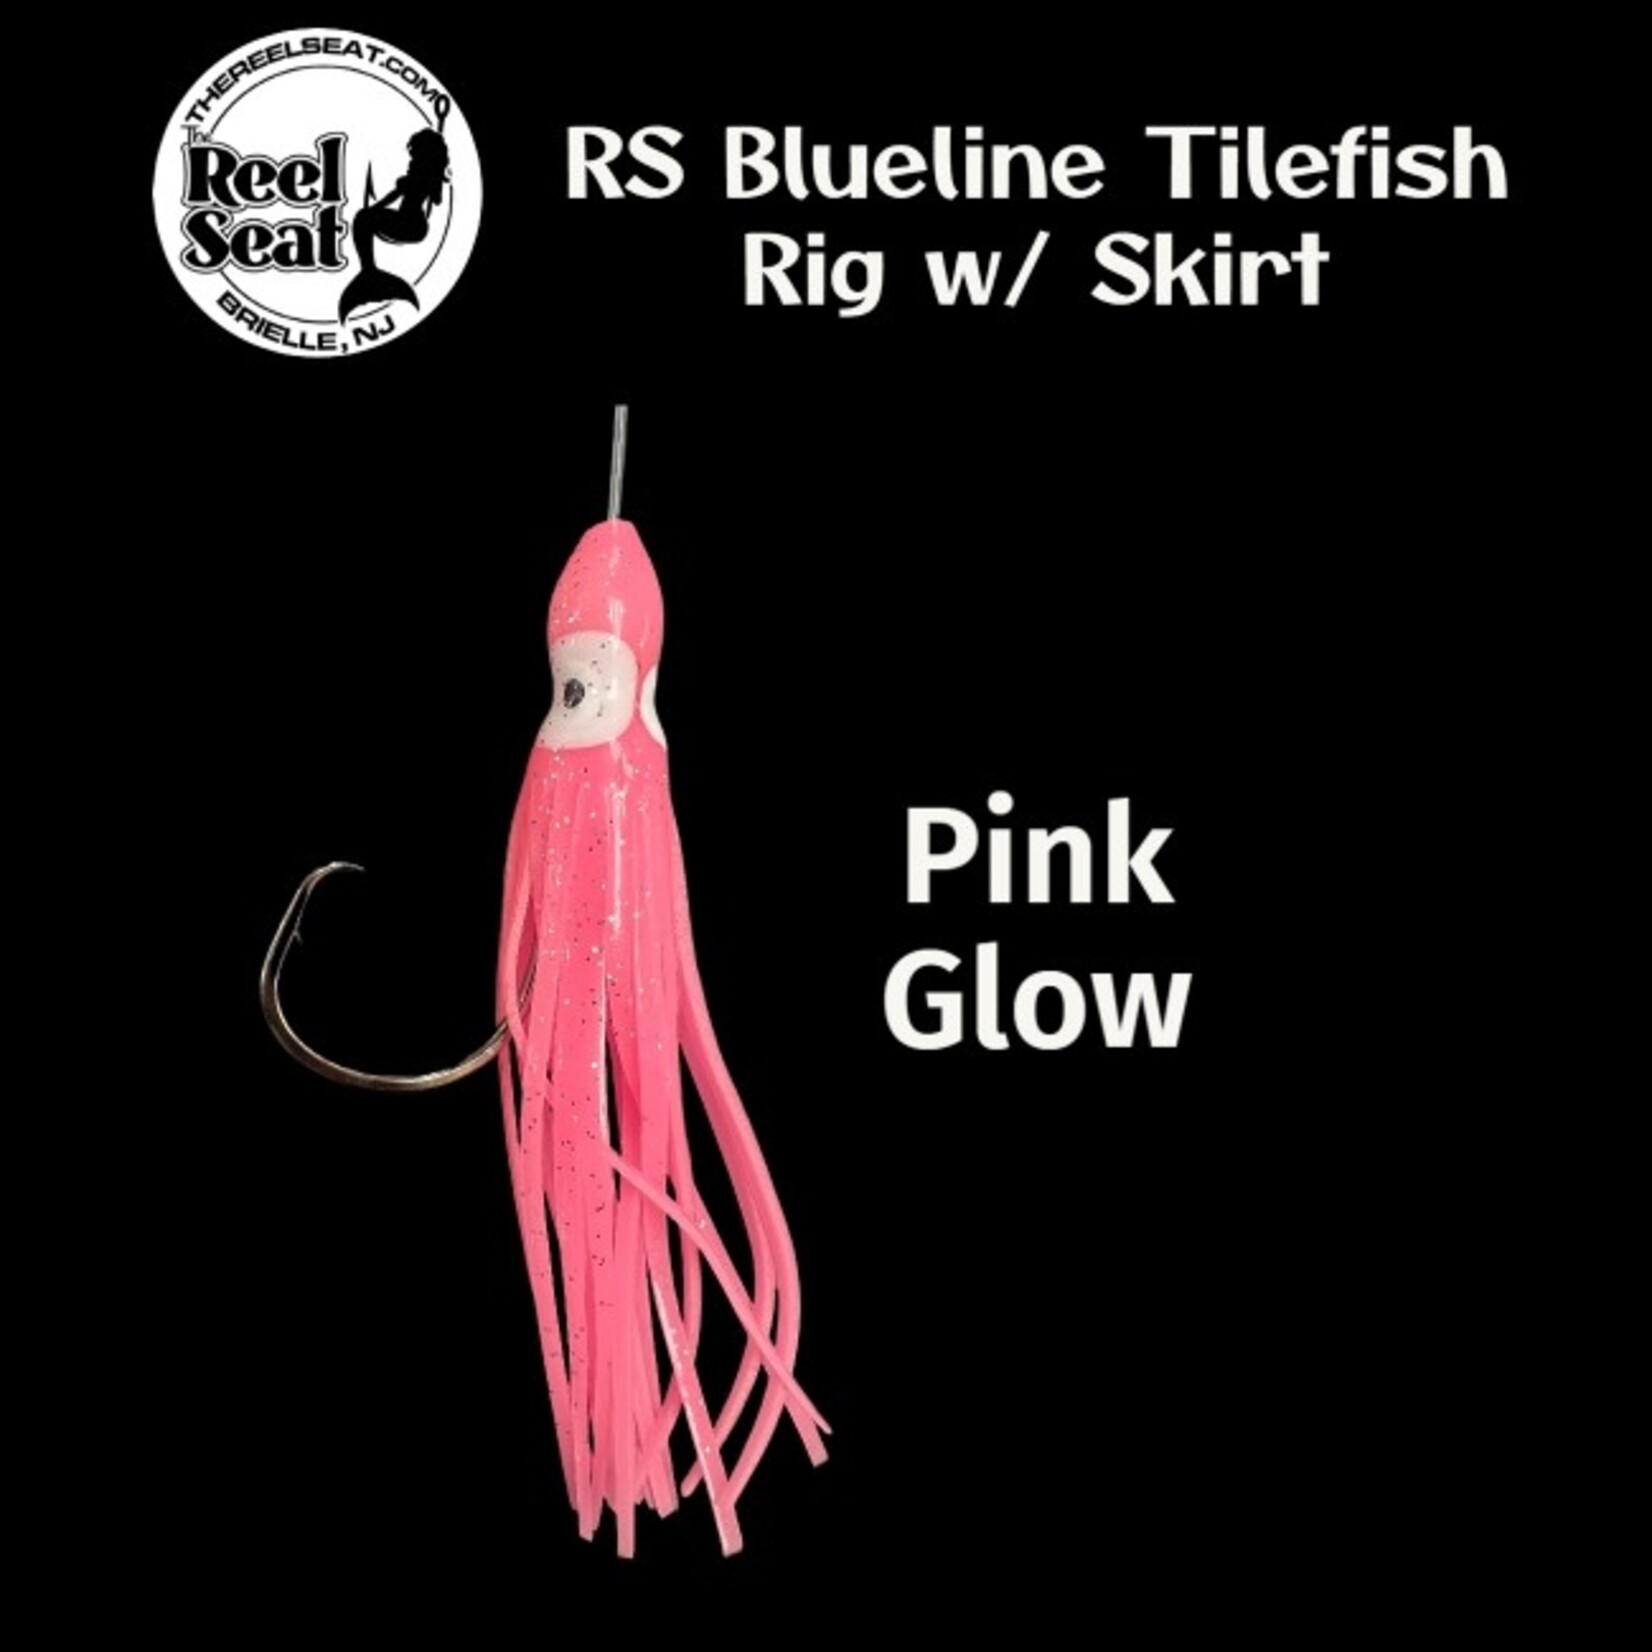 The Reel Seat RS Blueline Tilefish Rig w/ skirt